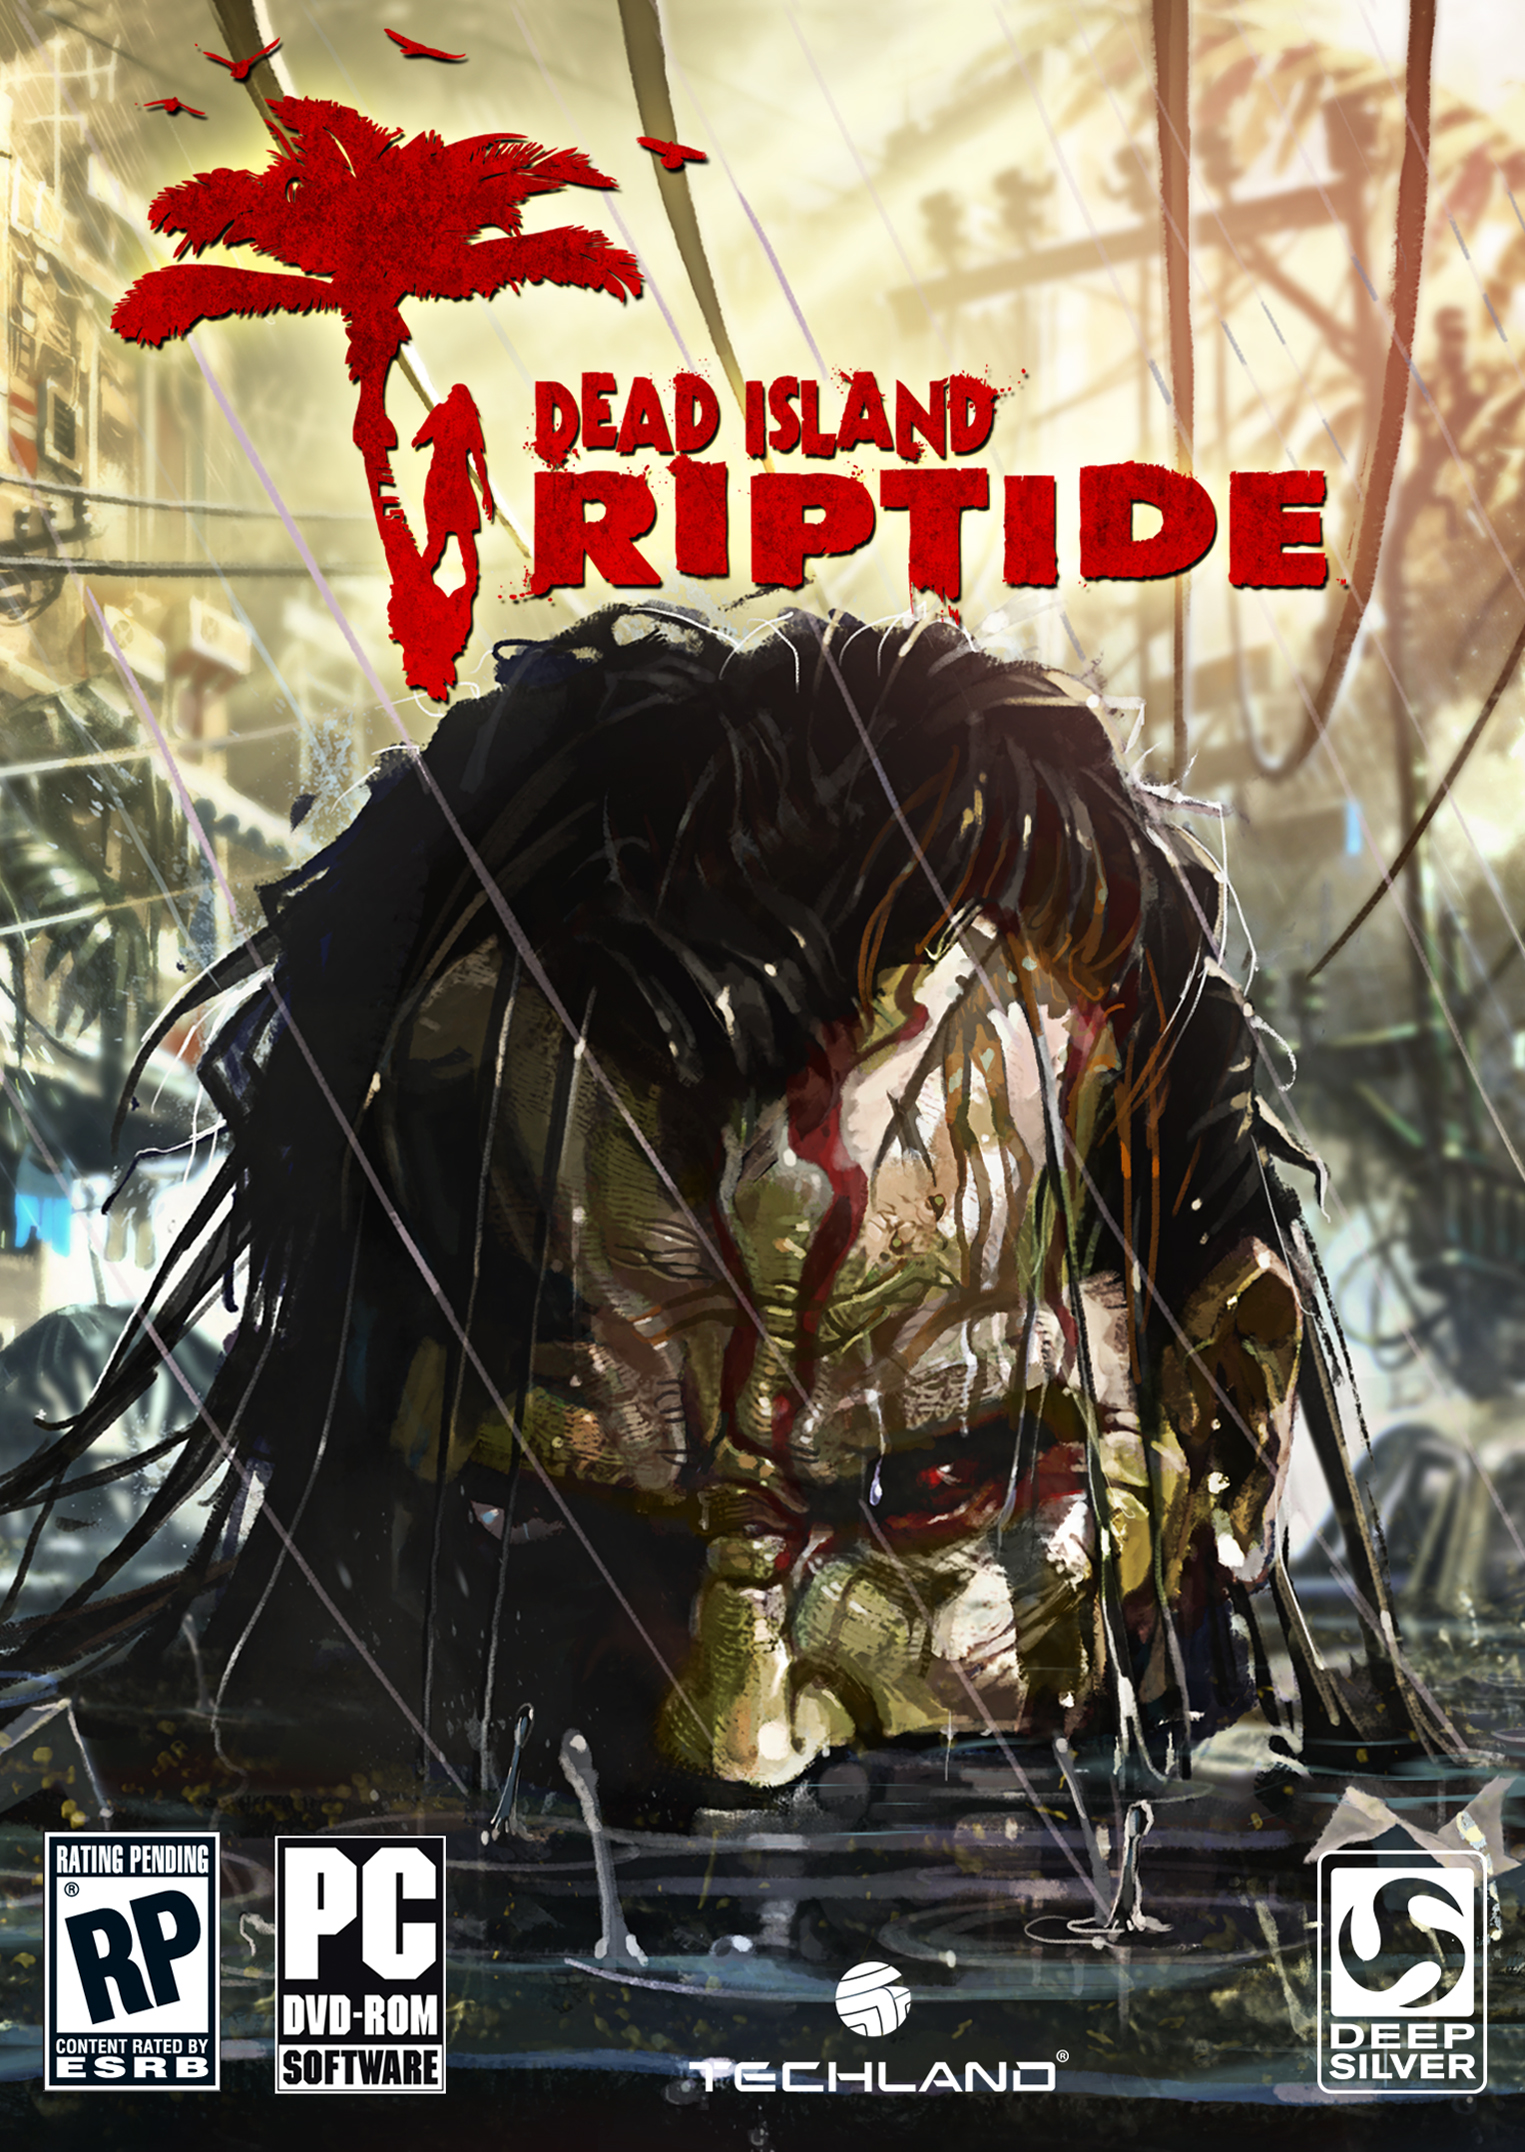 Nice Images Collection: Dead Island: Riptide Desktop Wallpapers